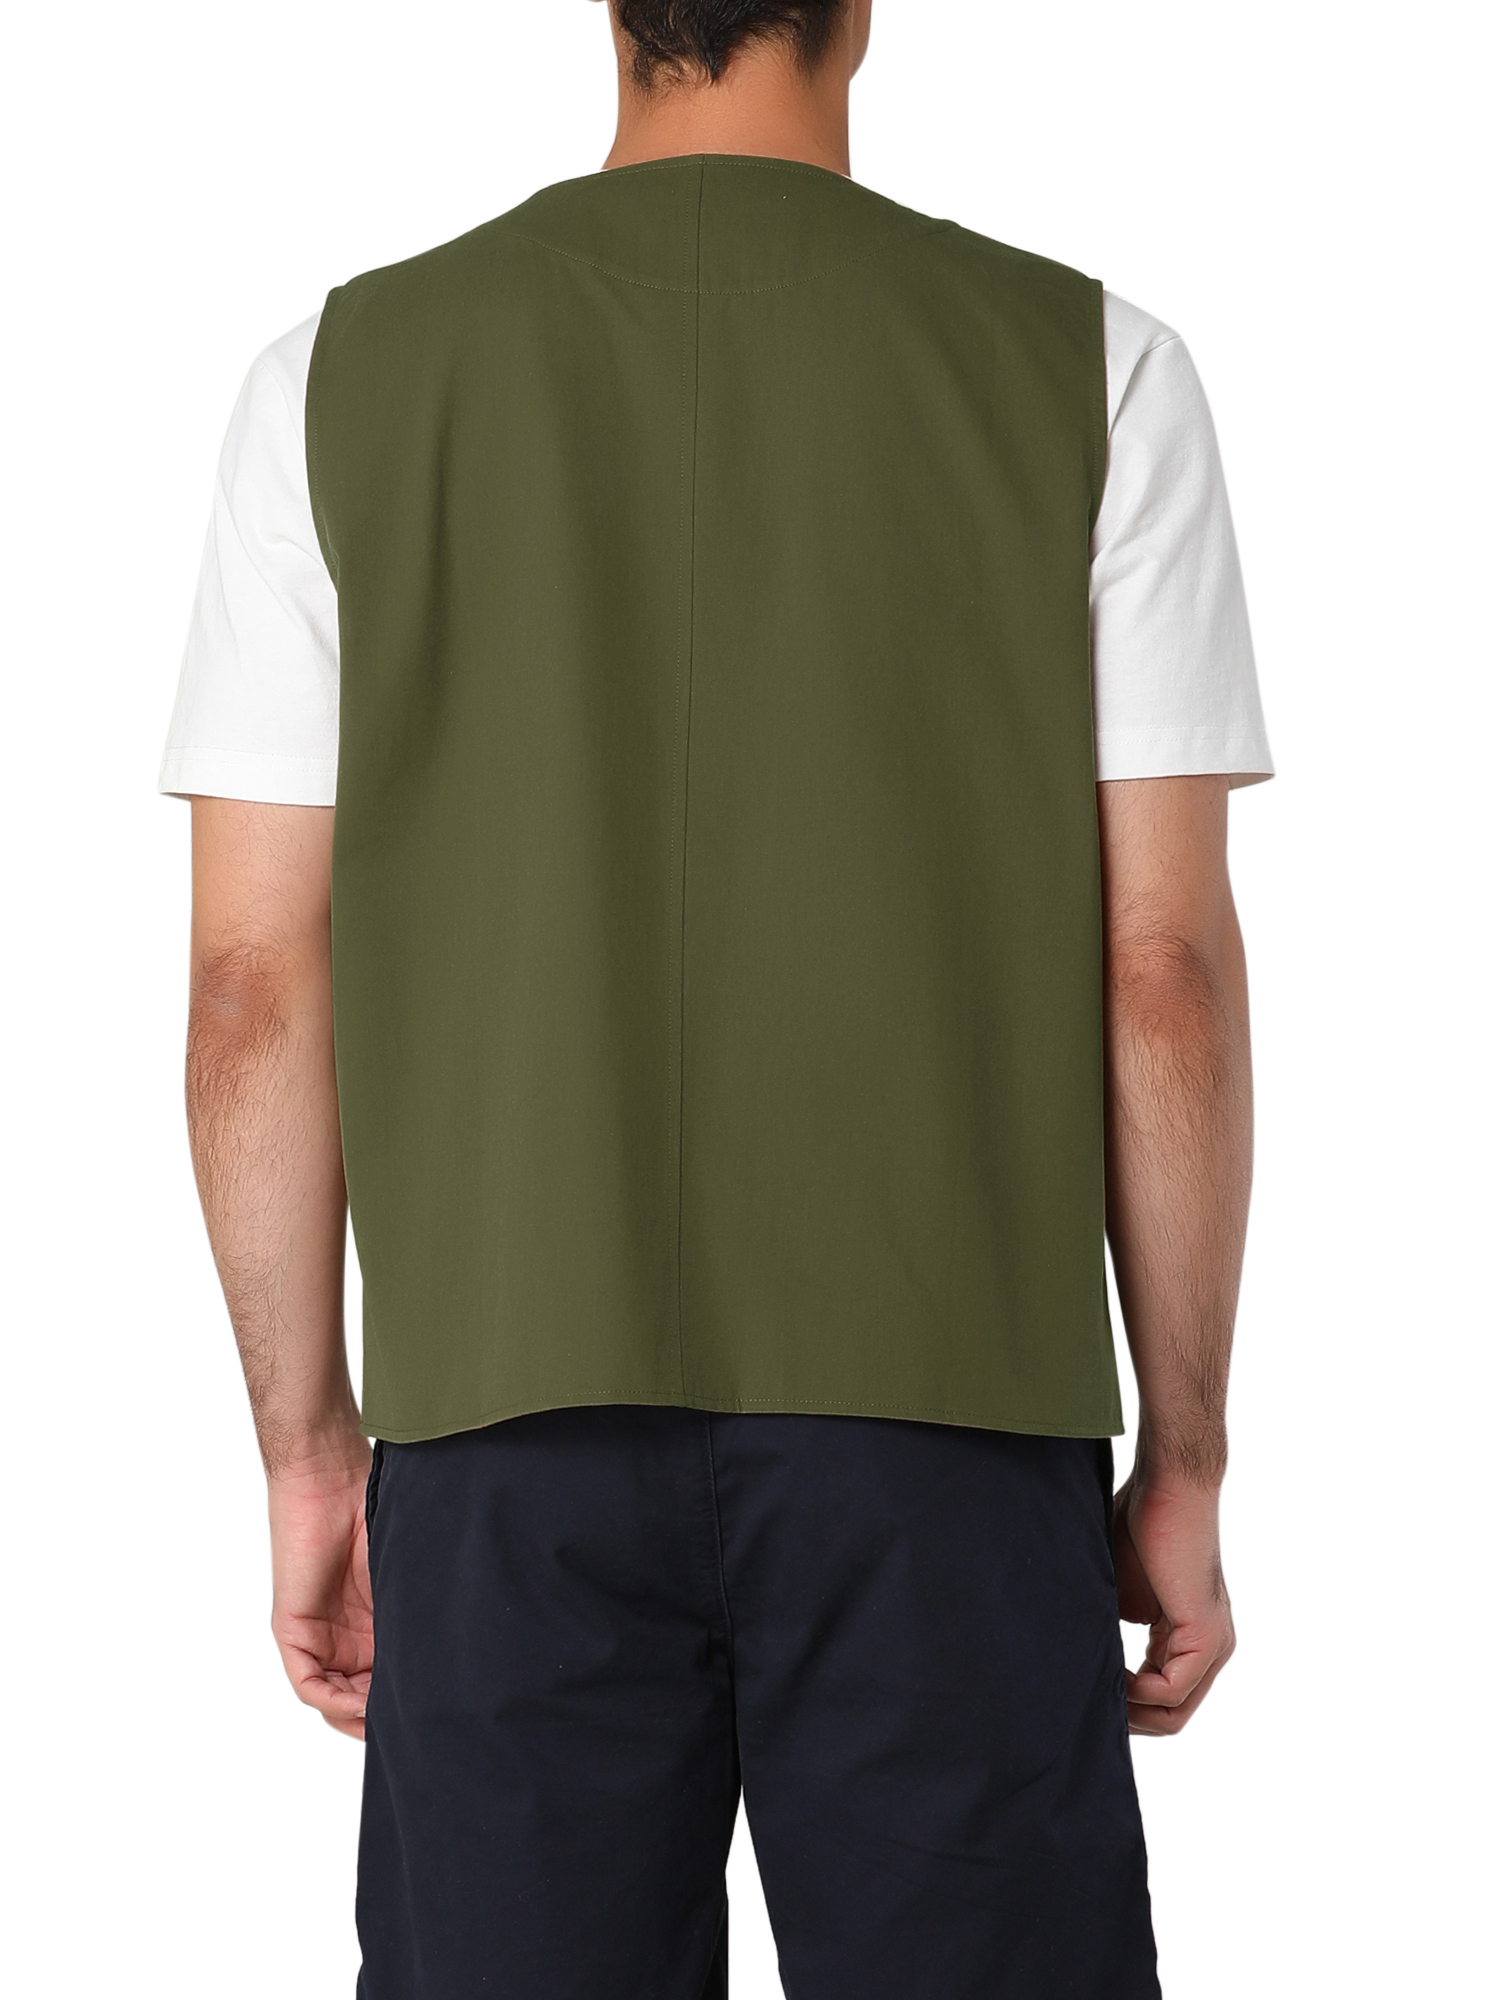 MODA NOVA Big & Tall Men's Waistcoats Casual Cotton Sleeveless Pockets Button Down V Neck Cargo Vests Green LT - image 3 of 5